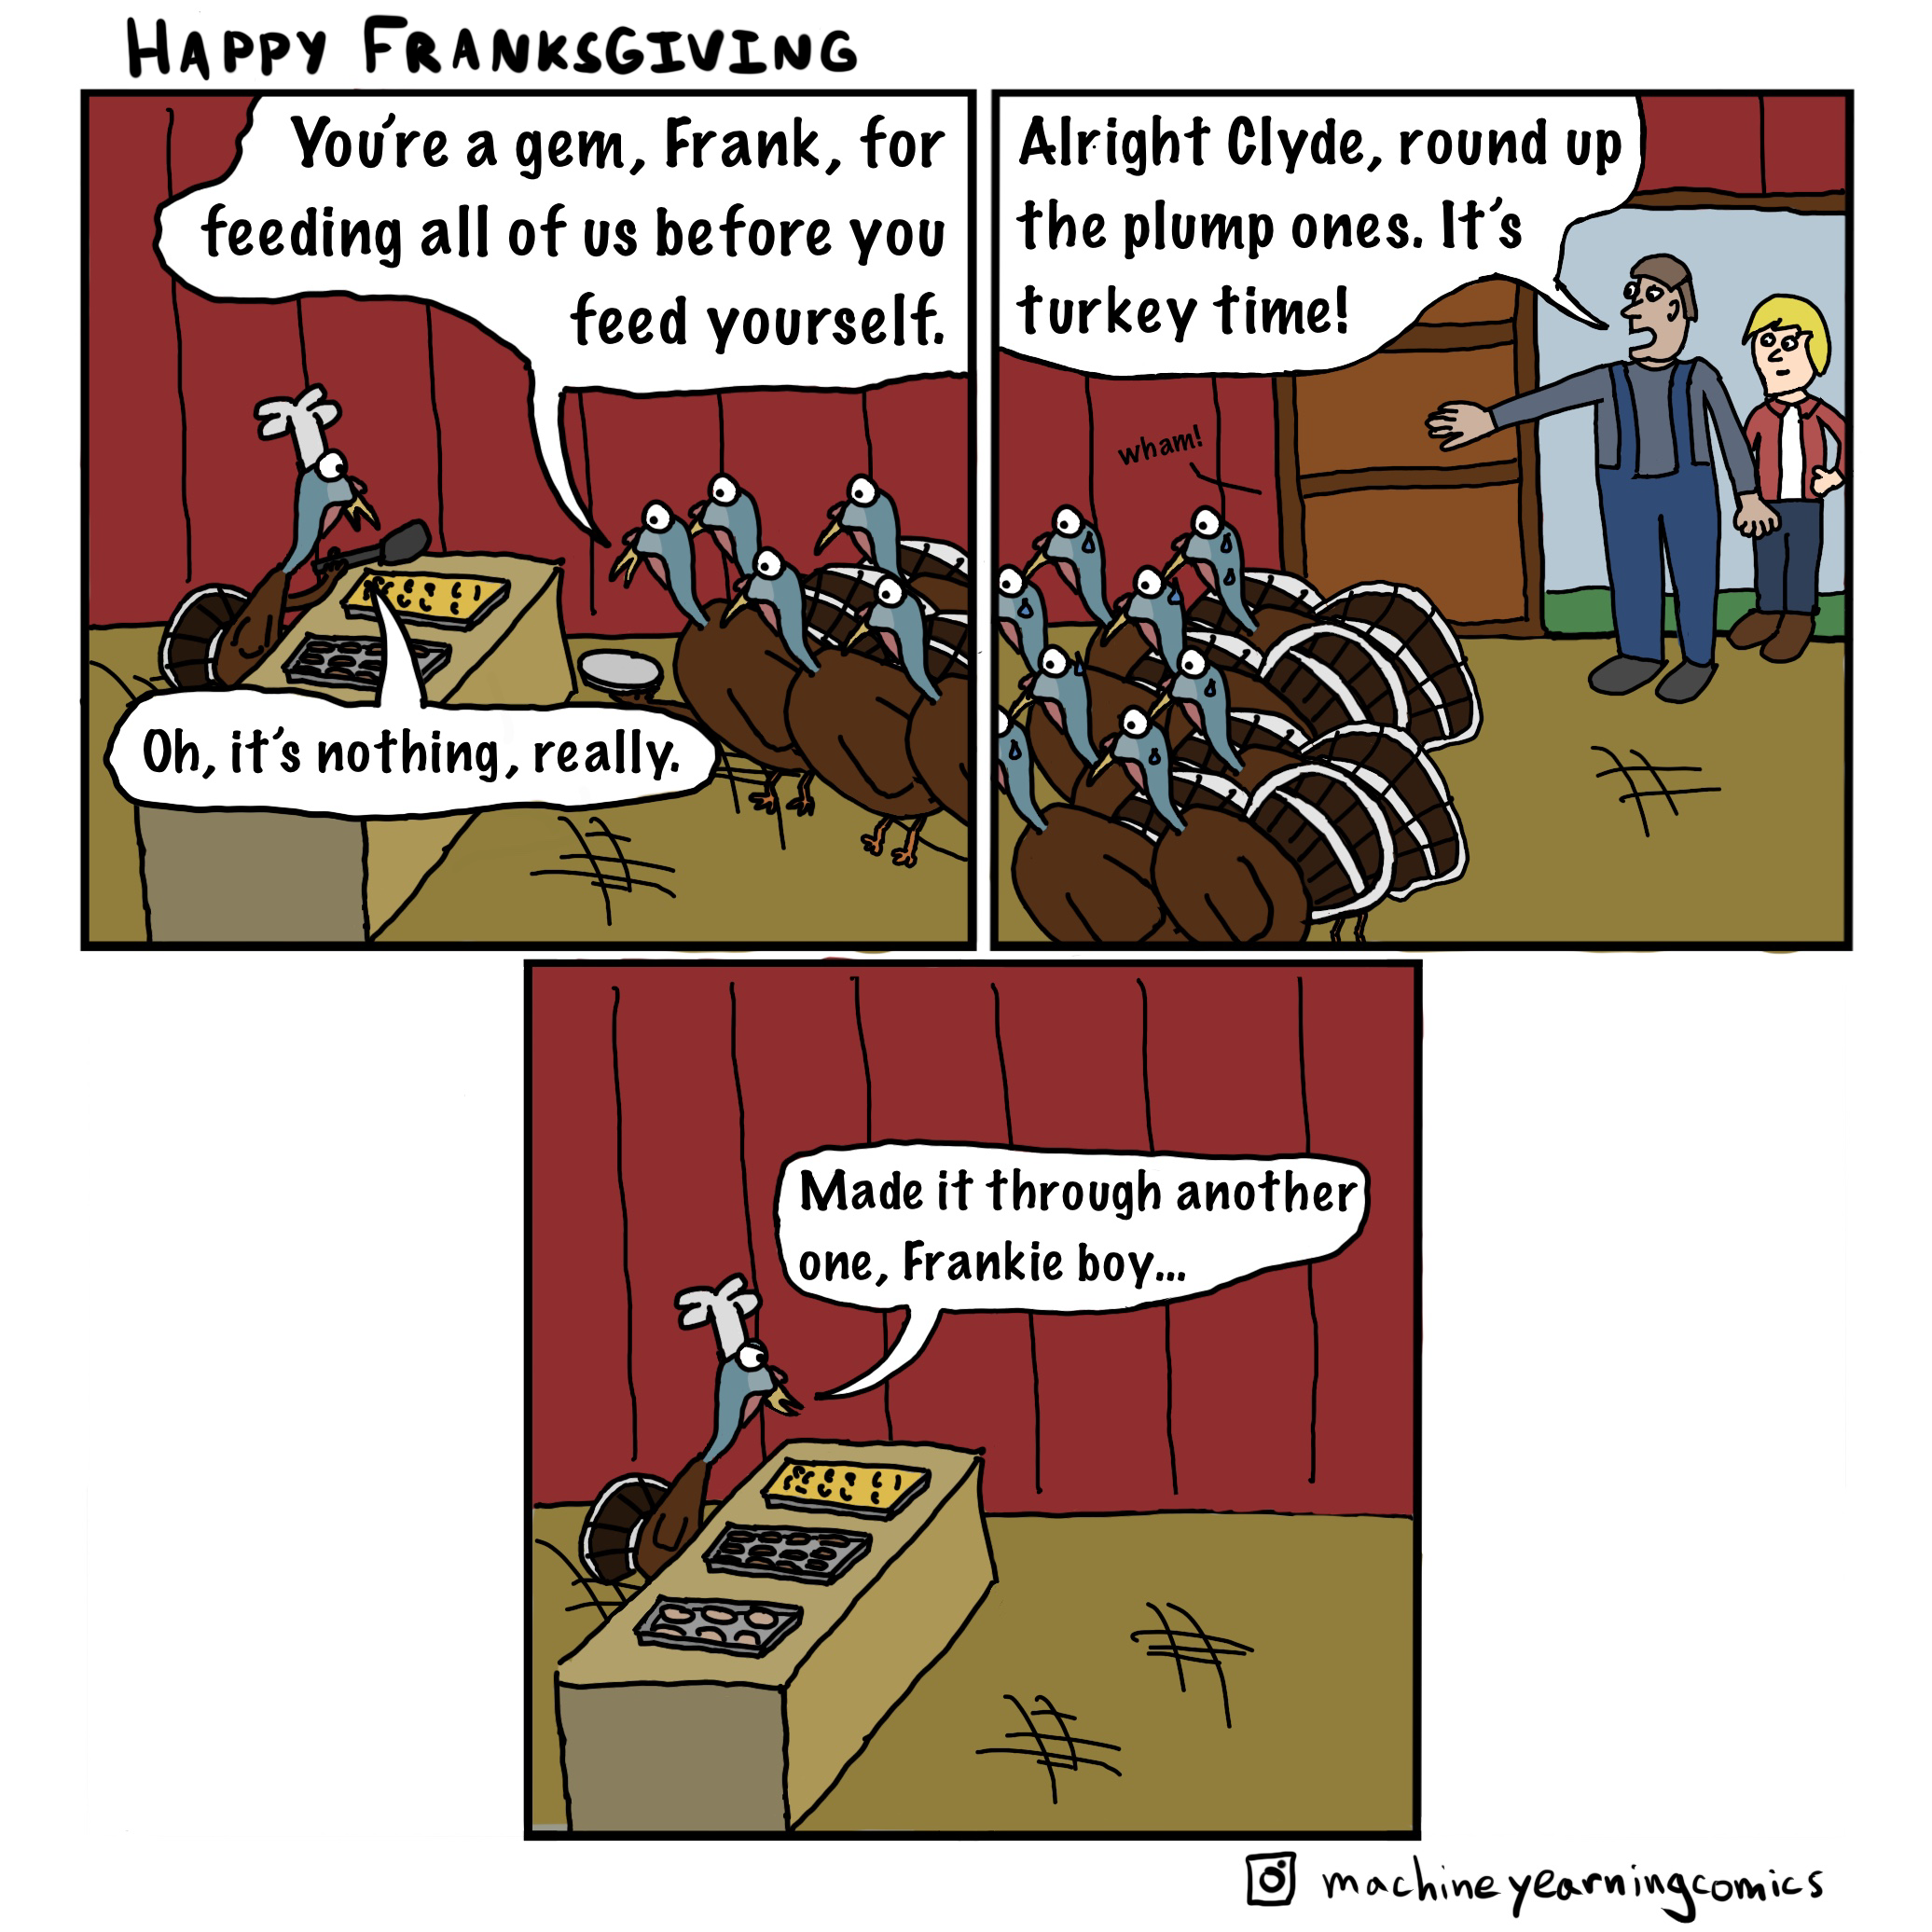 Happy Franksgiving